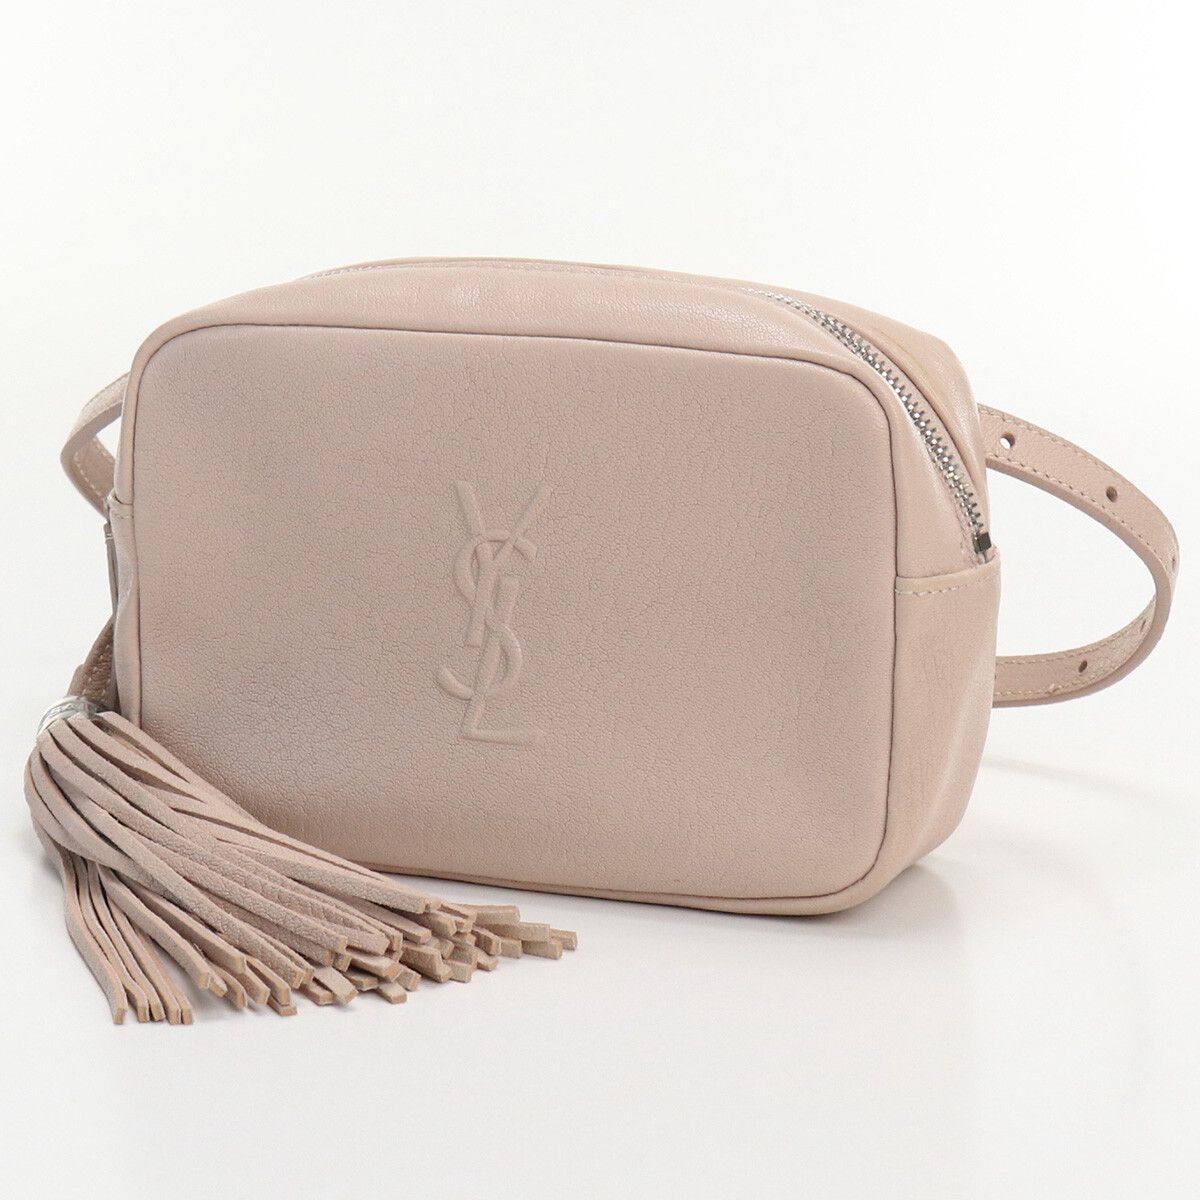 Yves Saint Laurent Yves Saint Laurent Belt Body Bag Leather Size ONE SIZE - 1 Preview